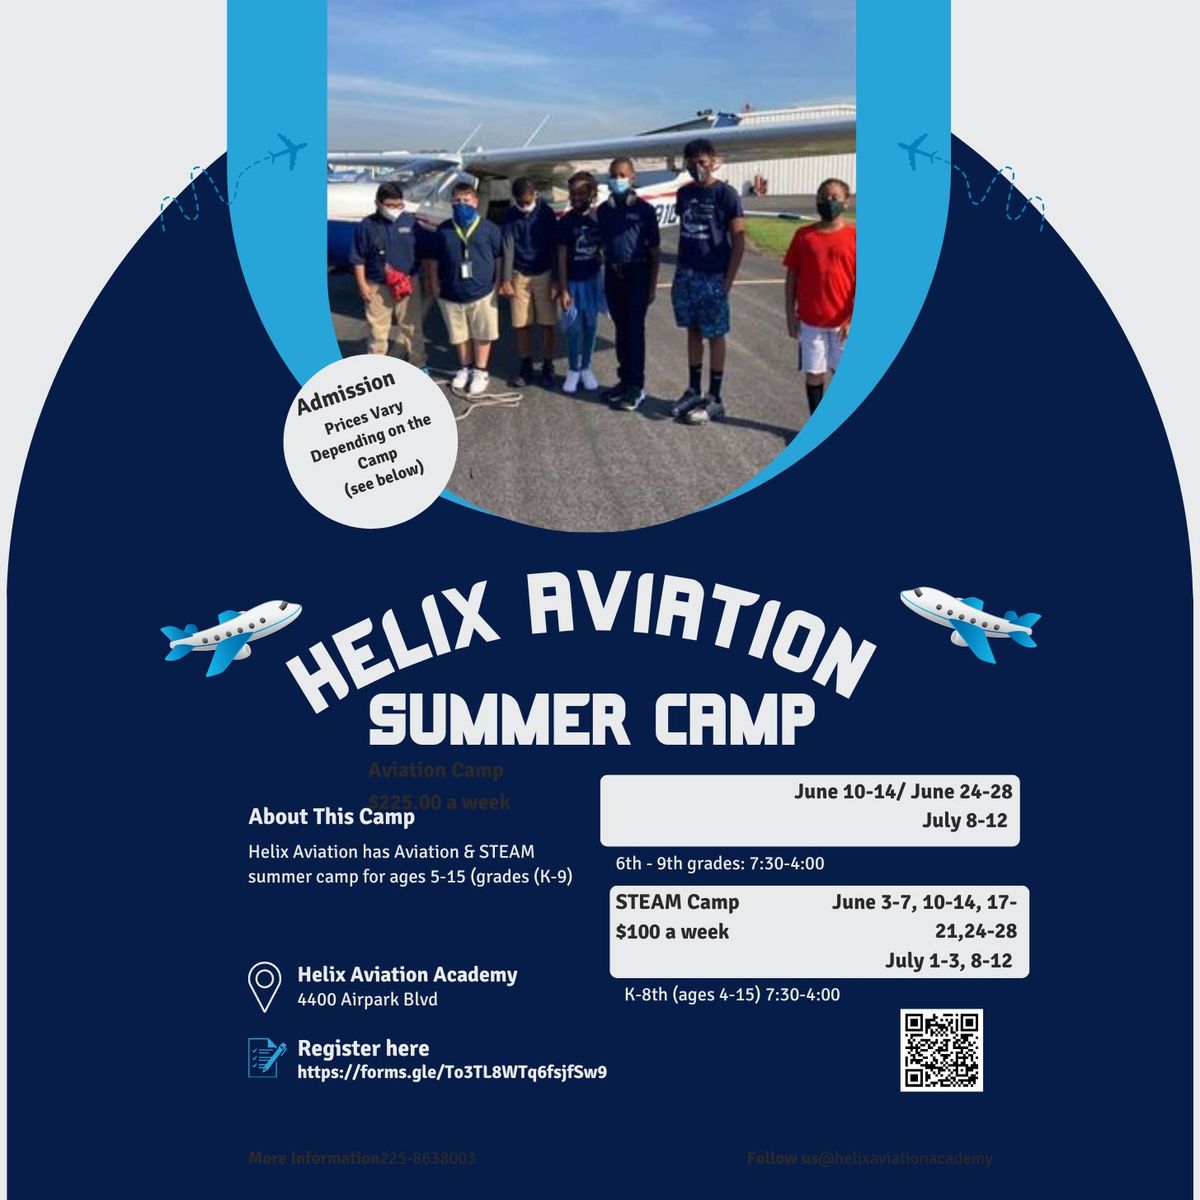 Helix Aviation Academy Summer Camp